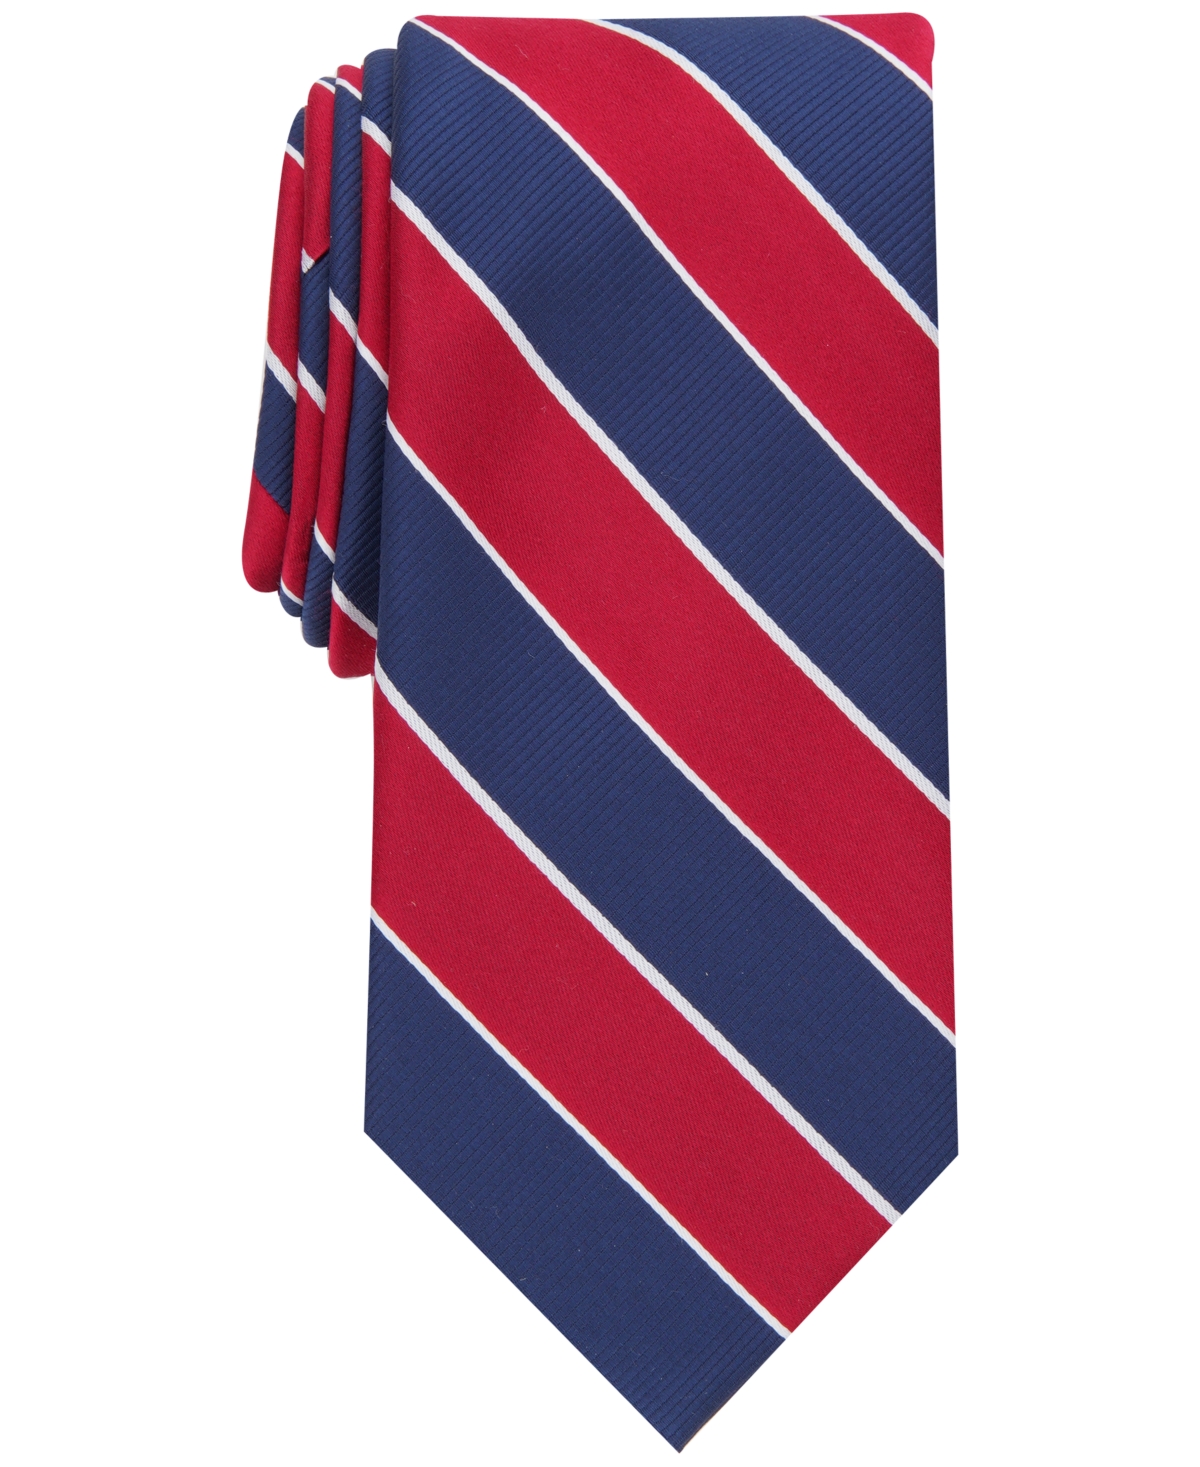 Men's Shore Stripe Tie, Created for Macy's - Red